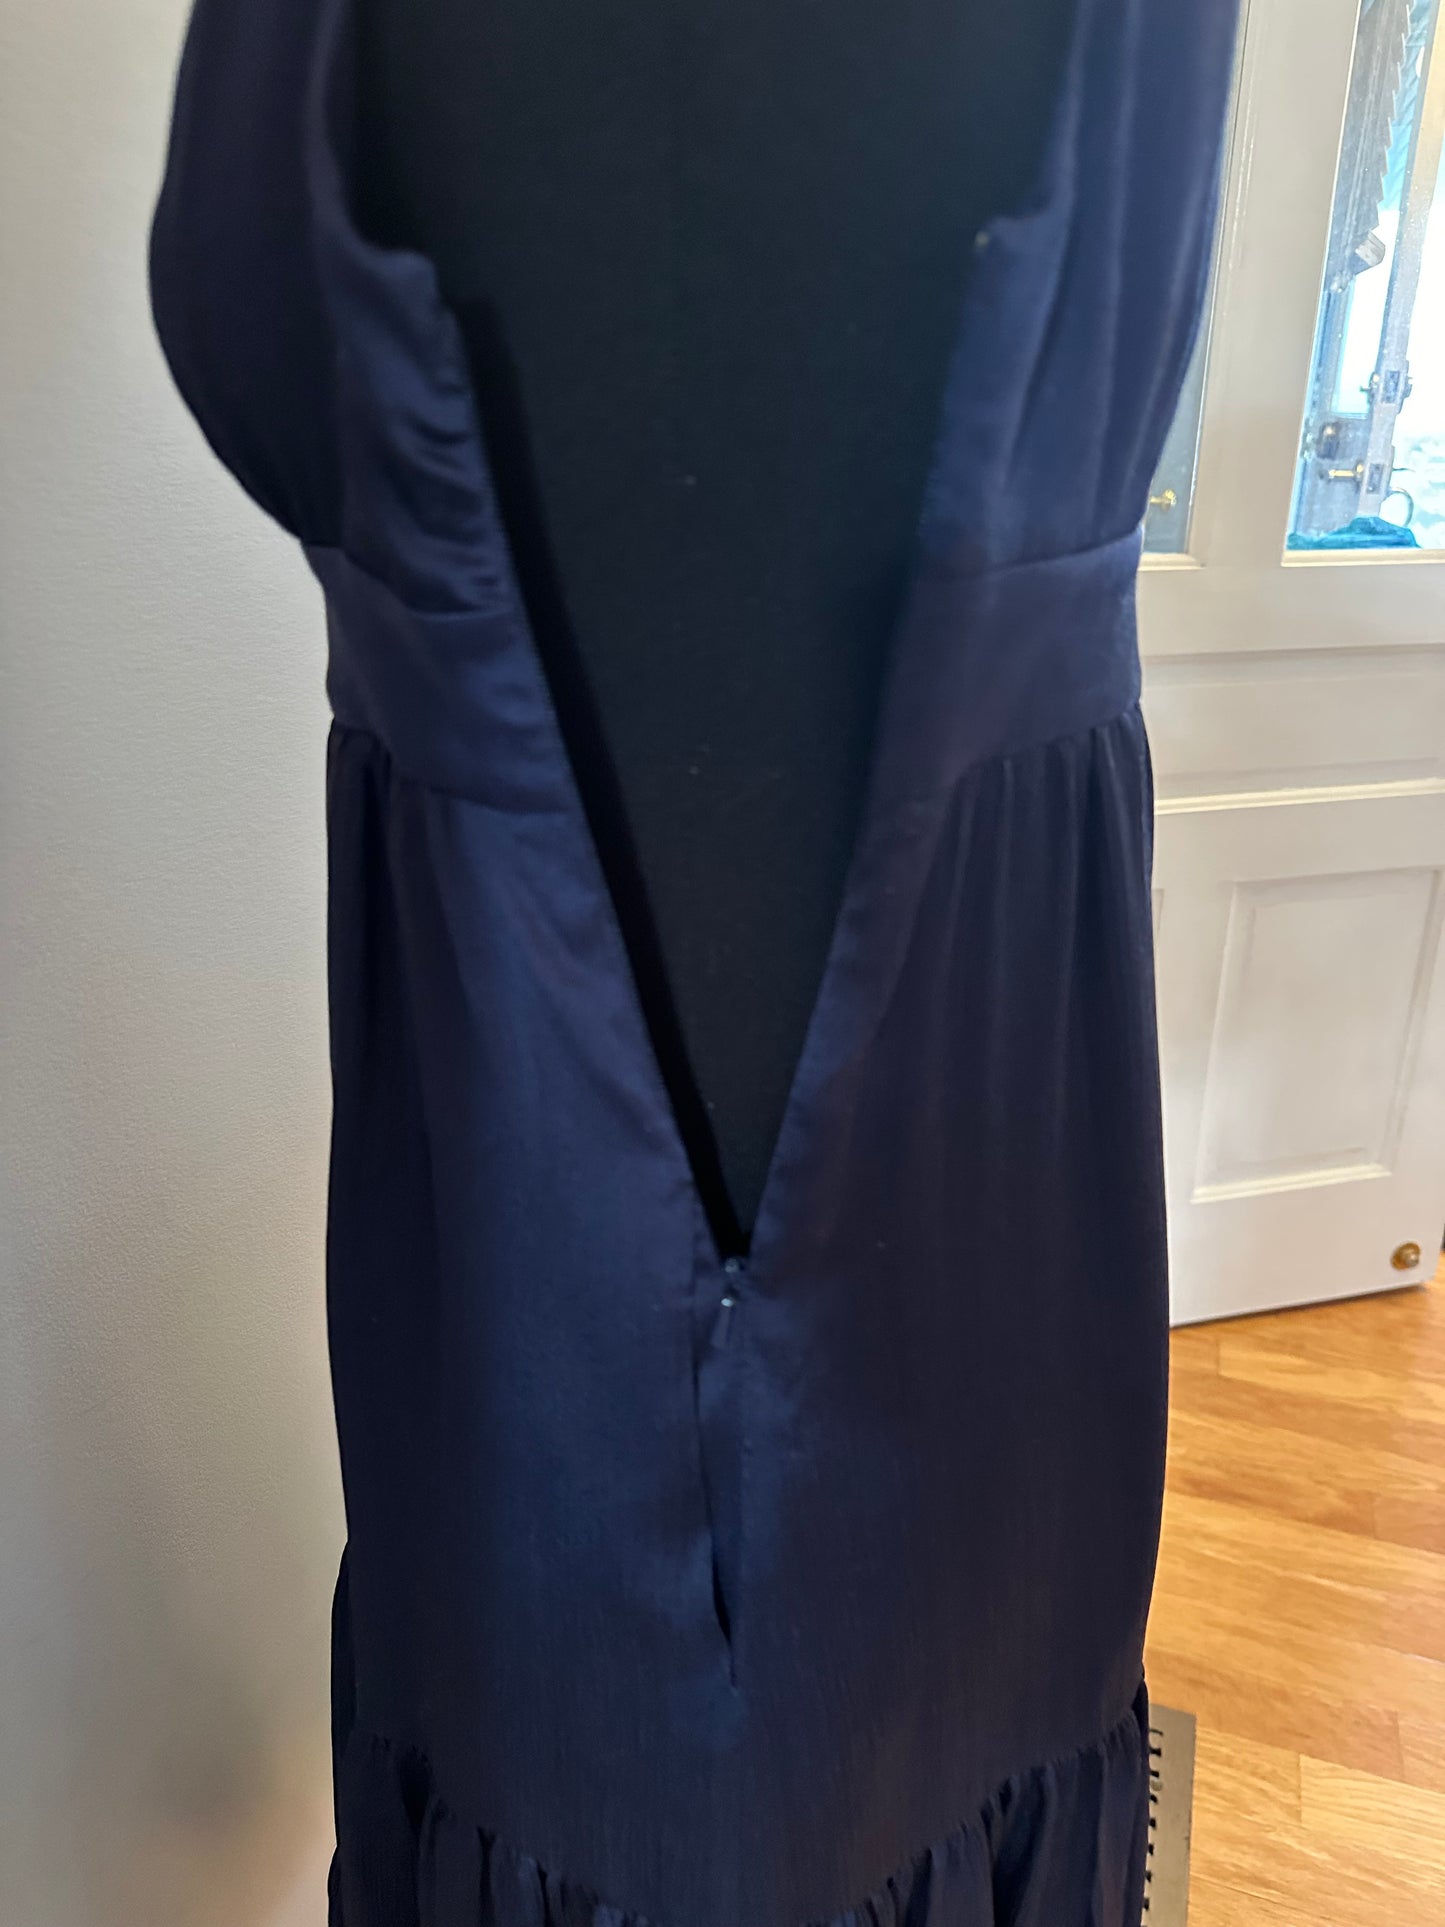 Lily Pulitzer Blue Silk Dress size 0